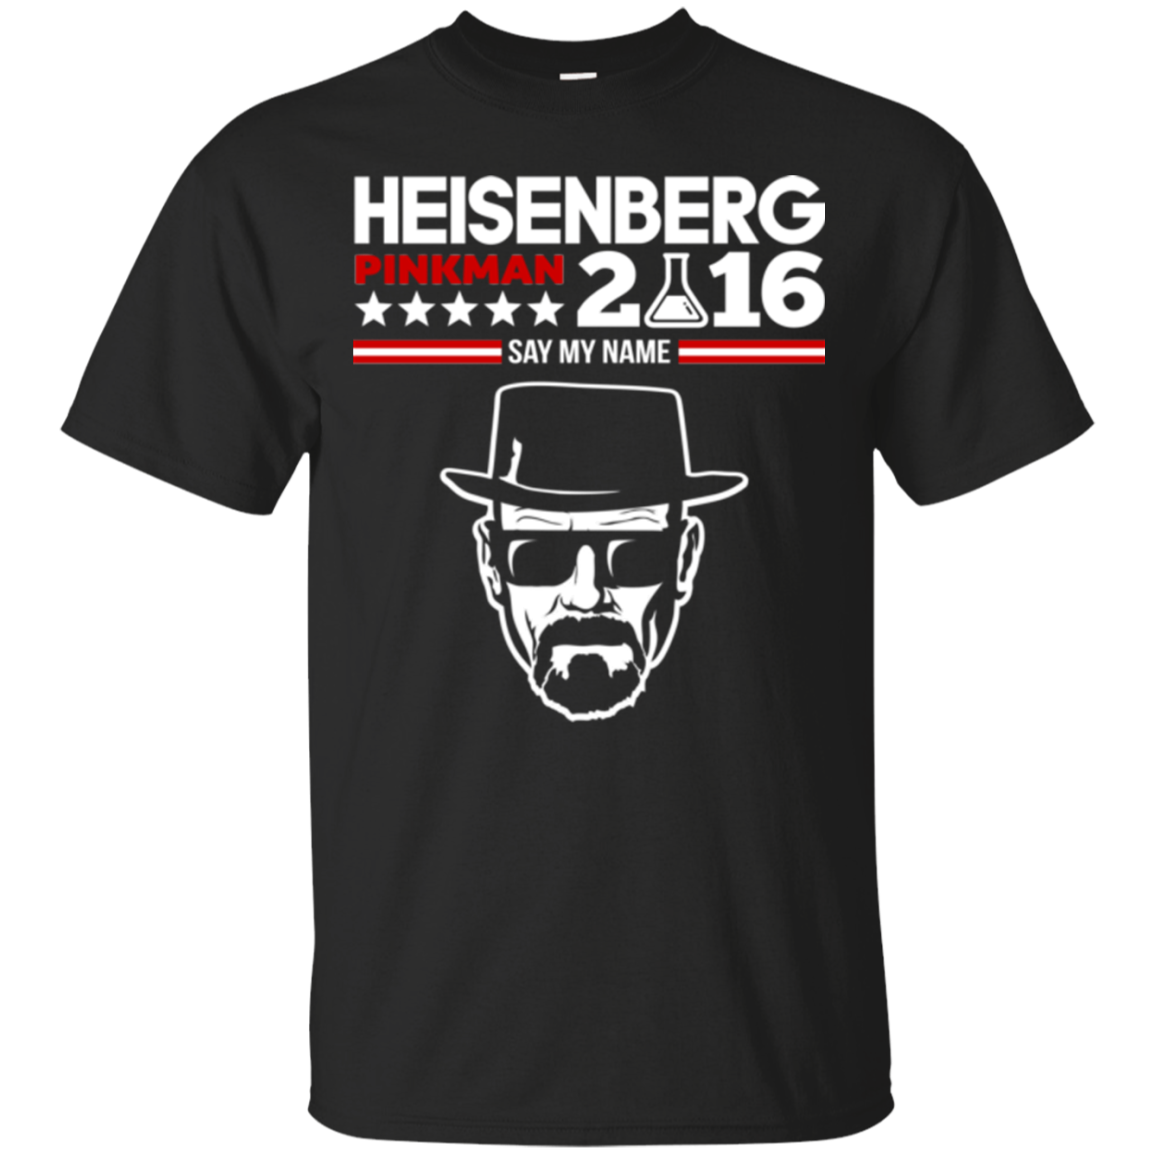 Heisenberg ft. Pinkman 2016 Shirts Say My Name Teesmiley